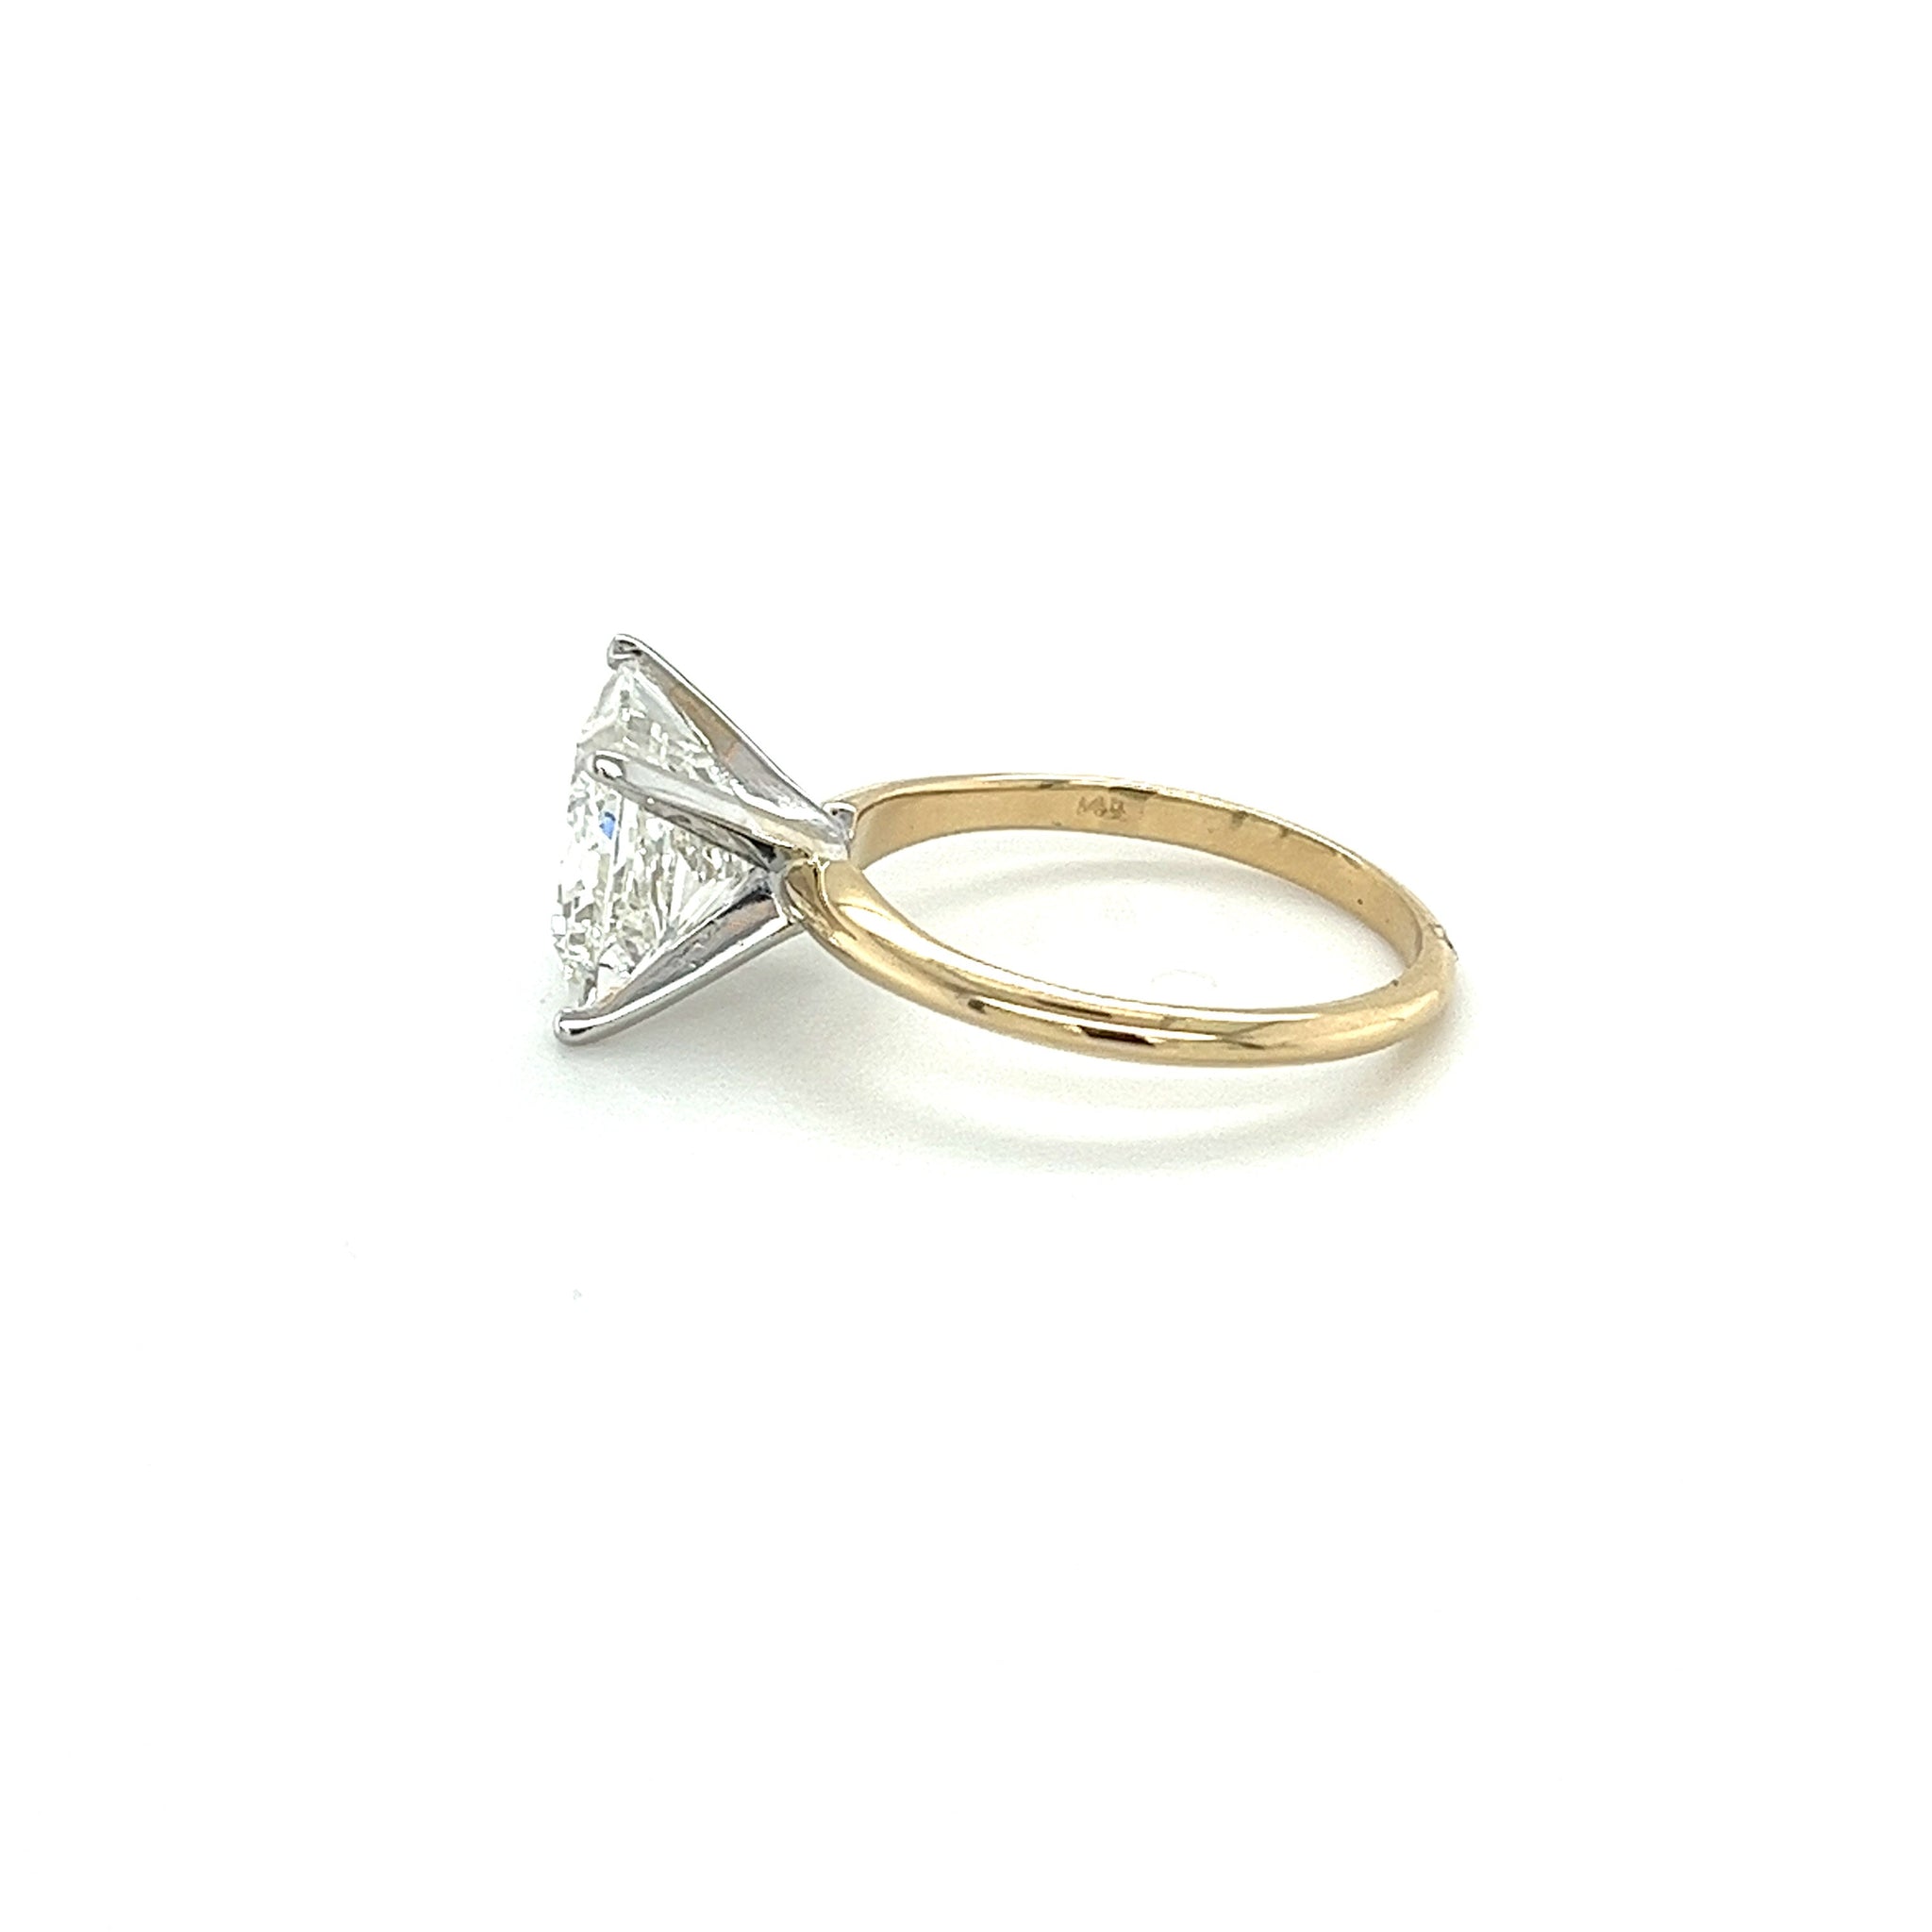 IGI Certified 3.3 Carat Princess Cut Lab Grown Diamond CVD Engagement Ring in 14K Gold 2-tone Solitaire Setting-Diamond Ring-ASSAY